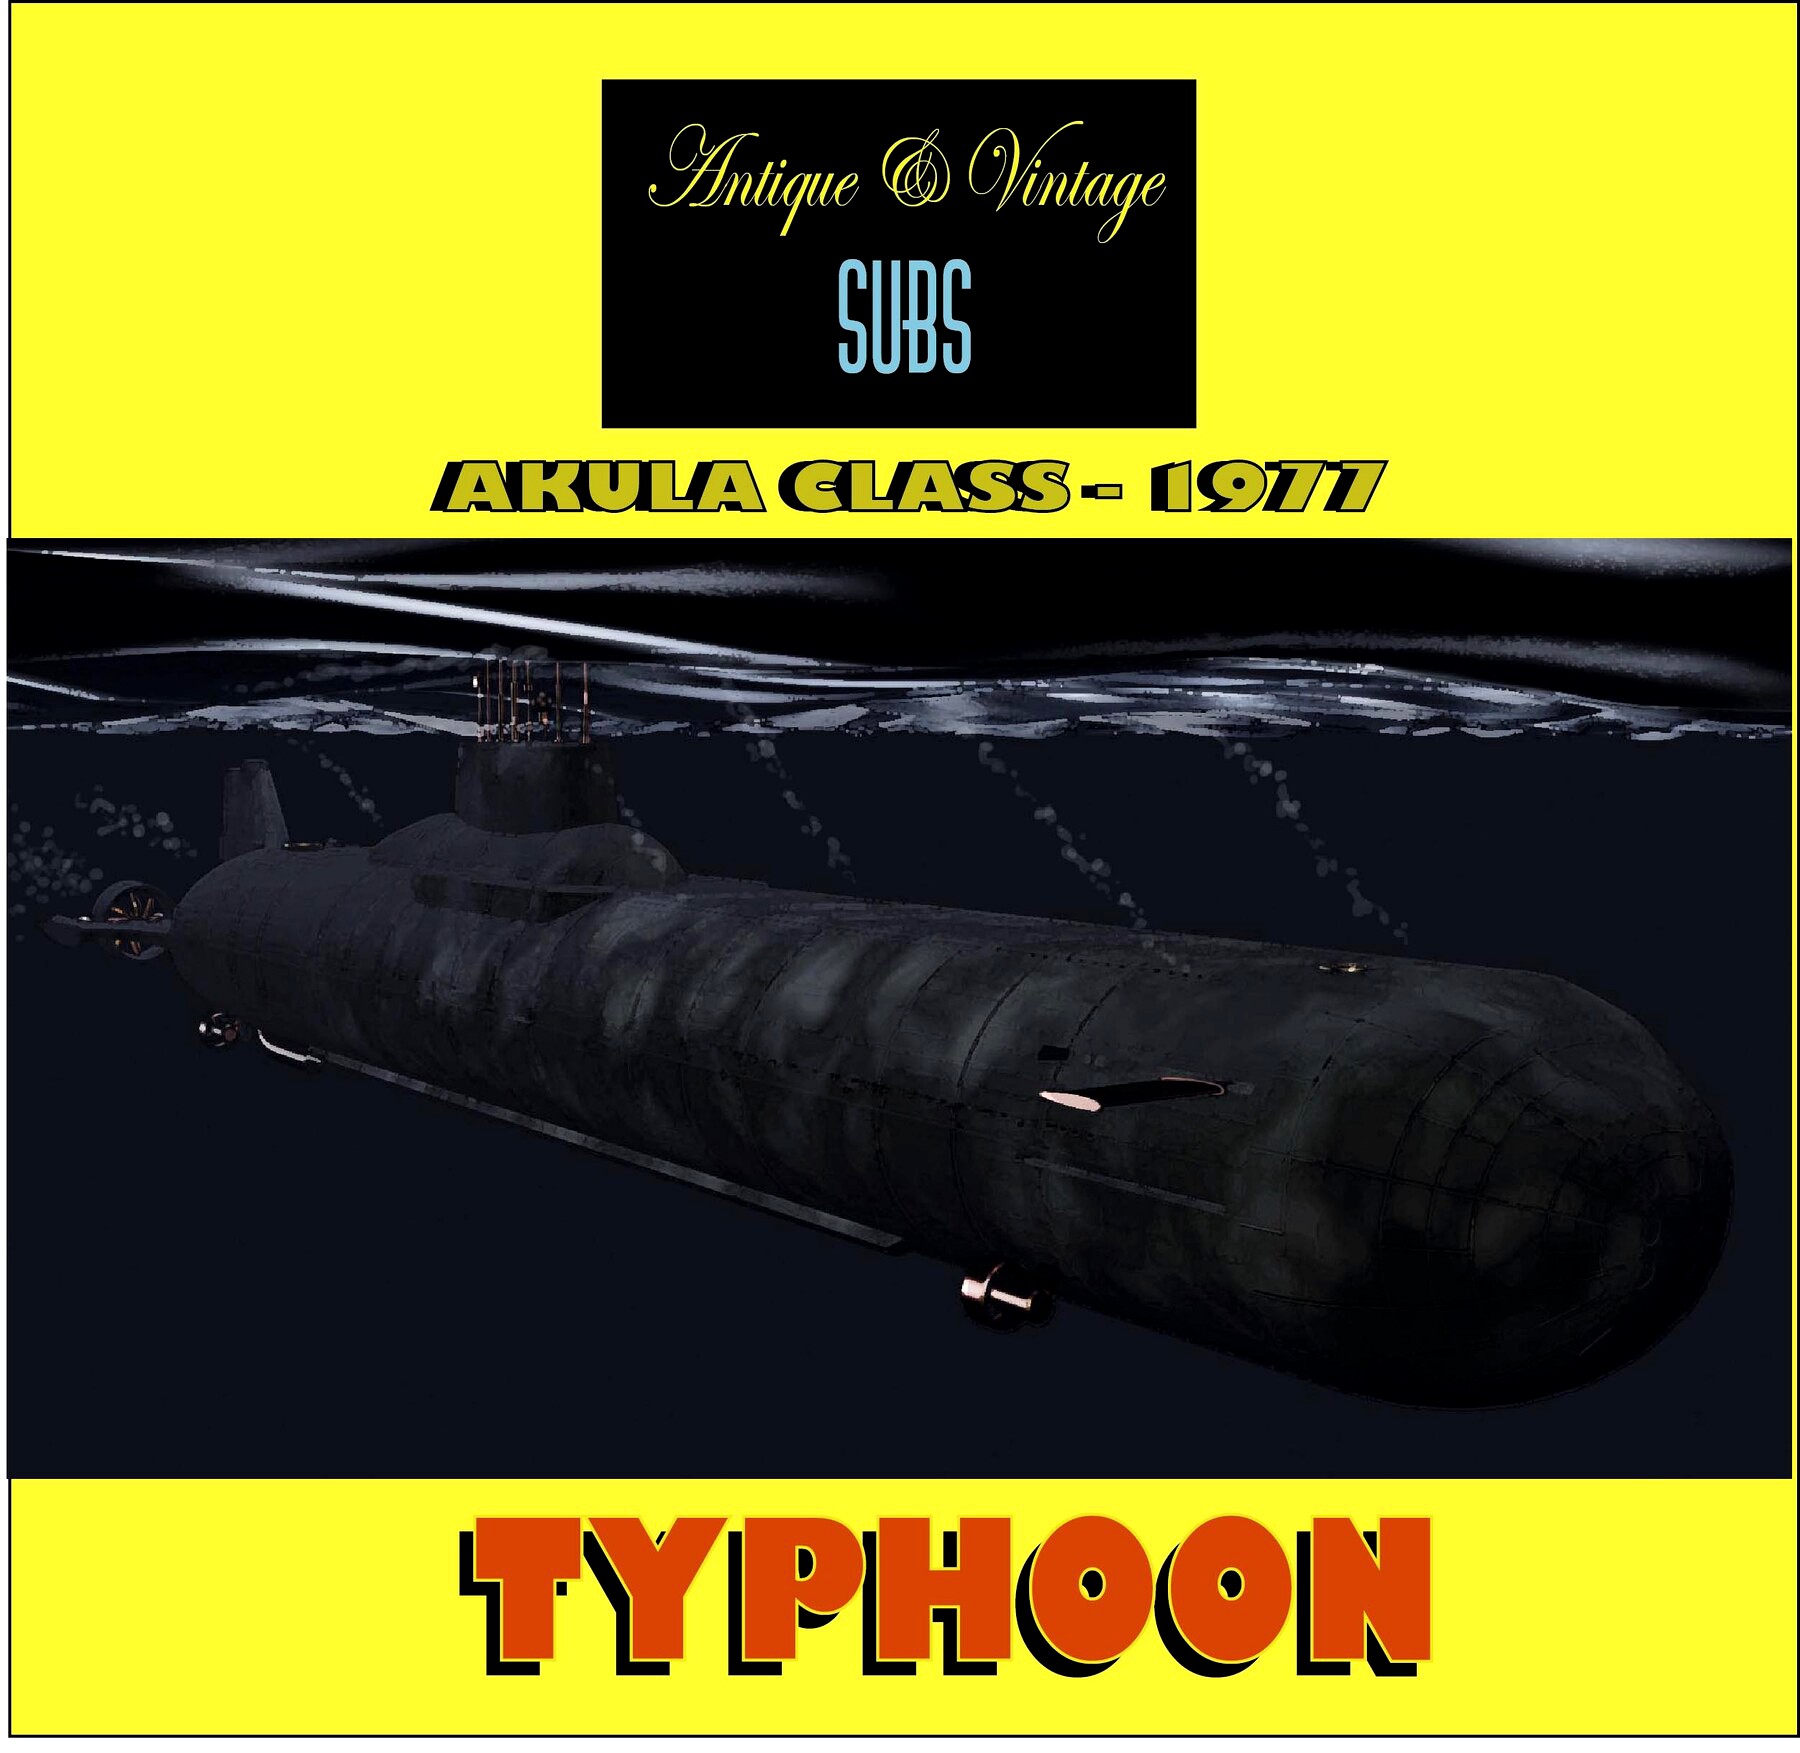 3D model of the Akula Typhoon sub